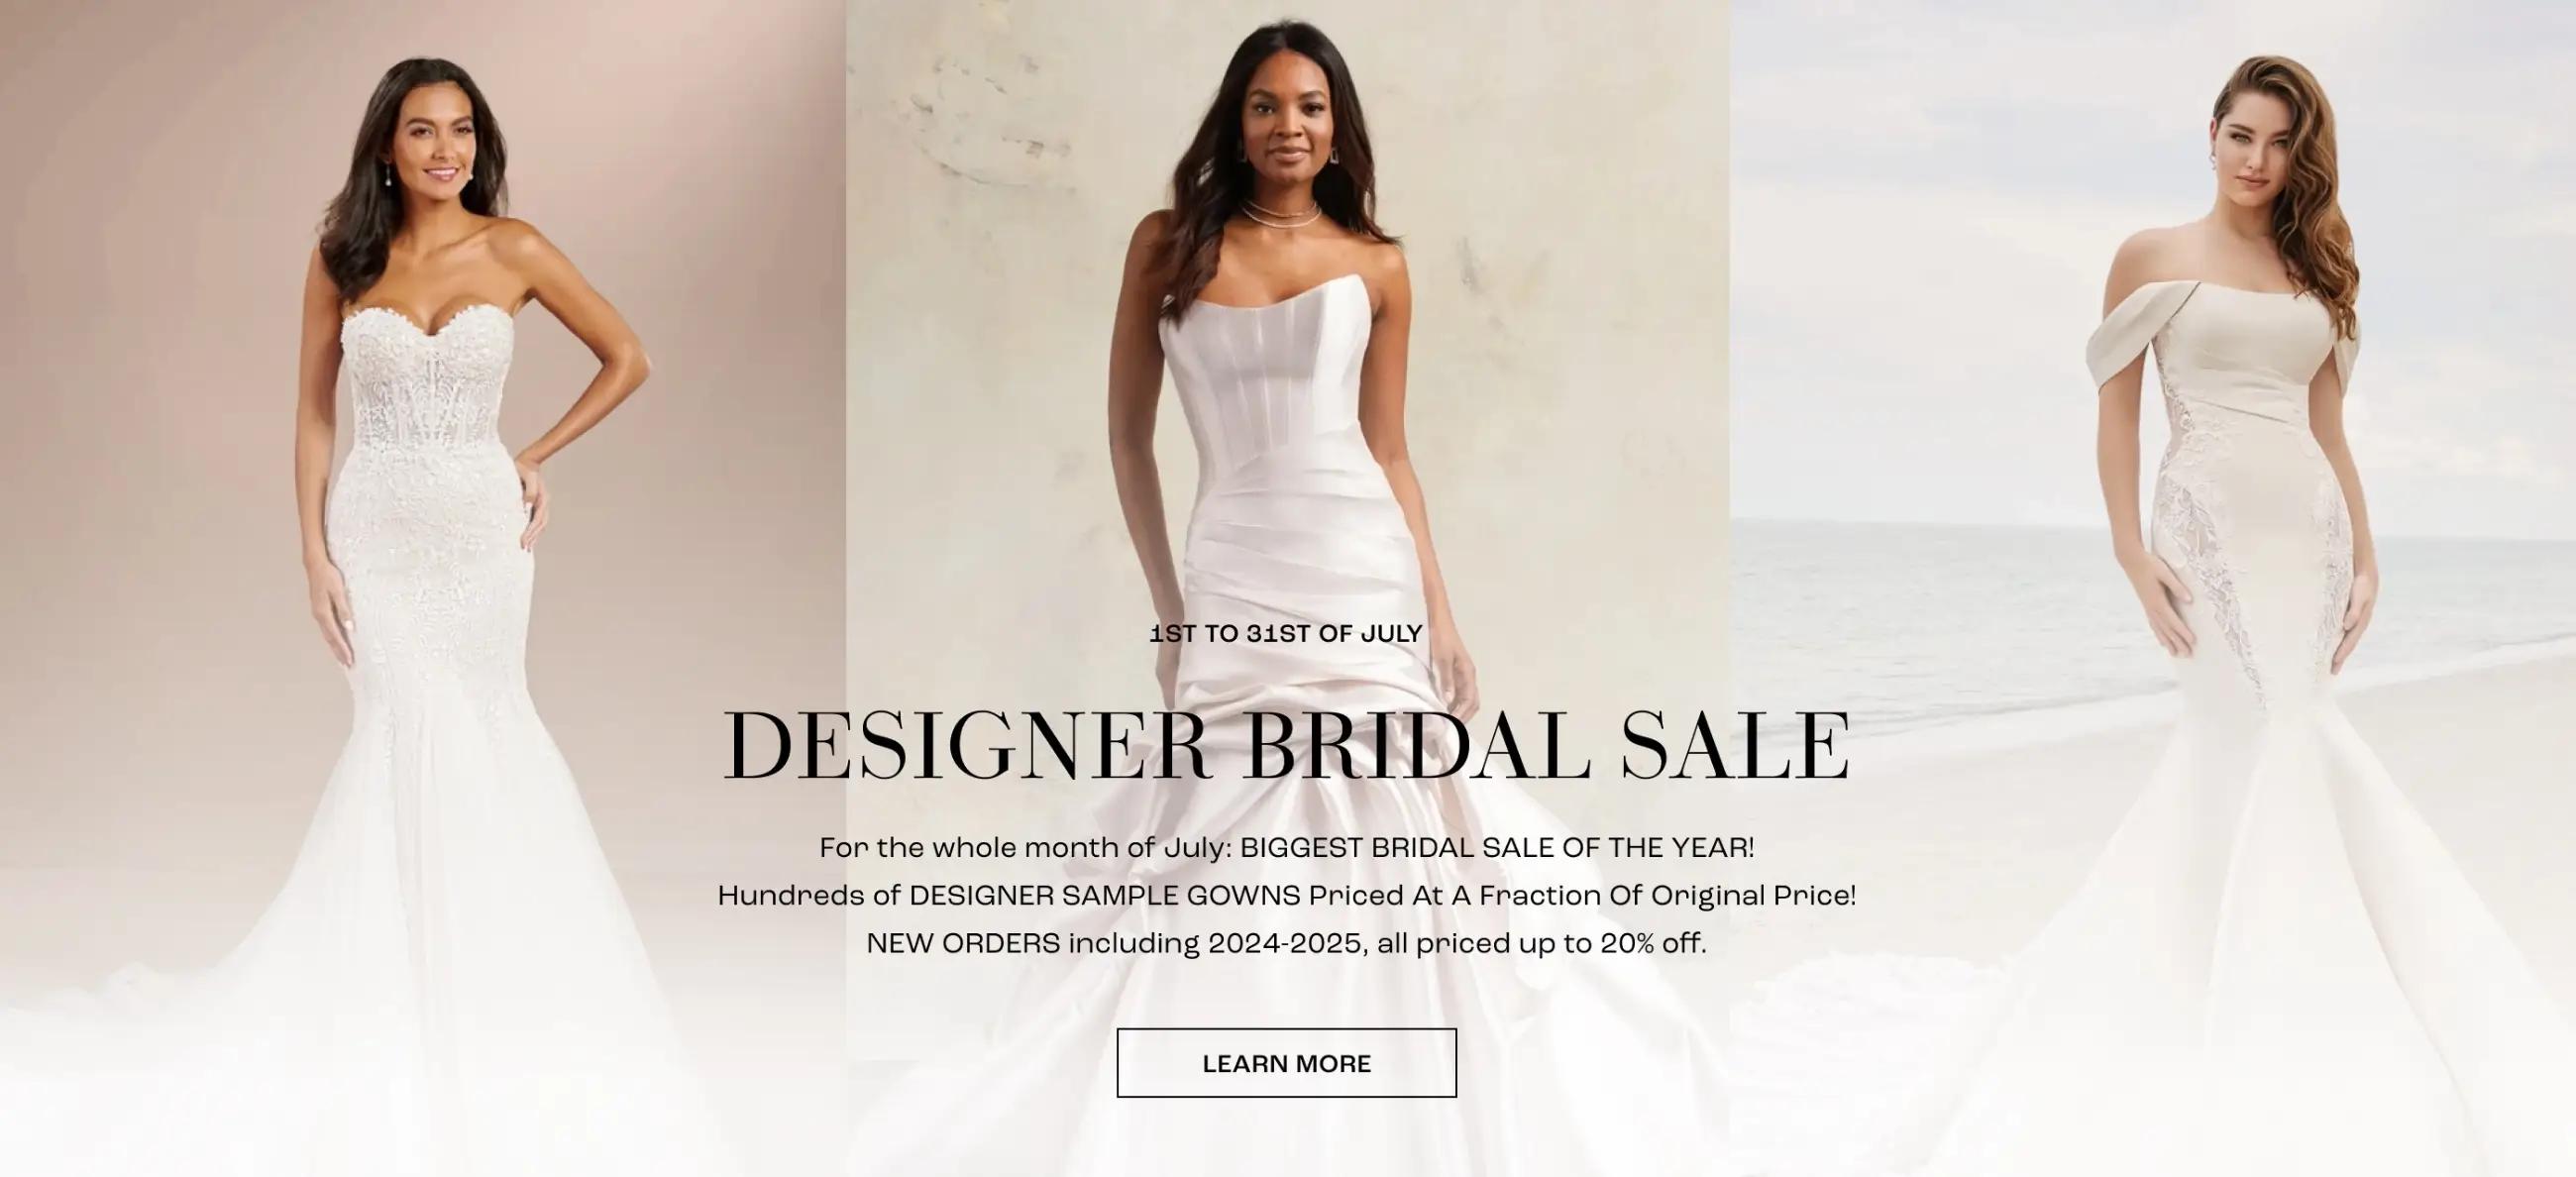 picture promoting designer bridal sale